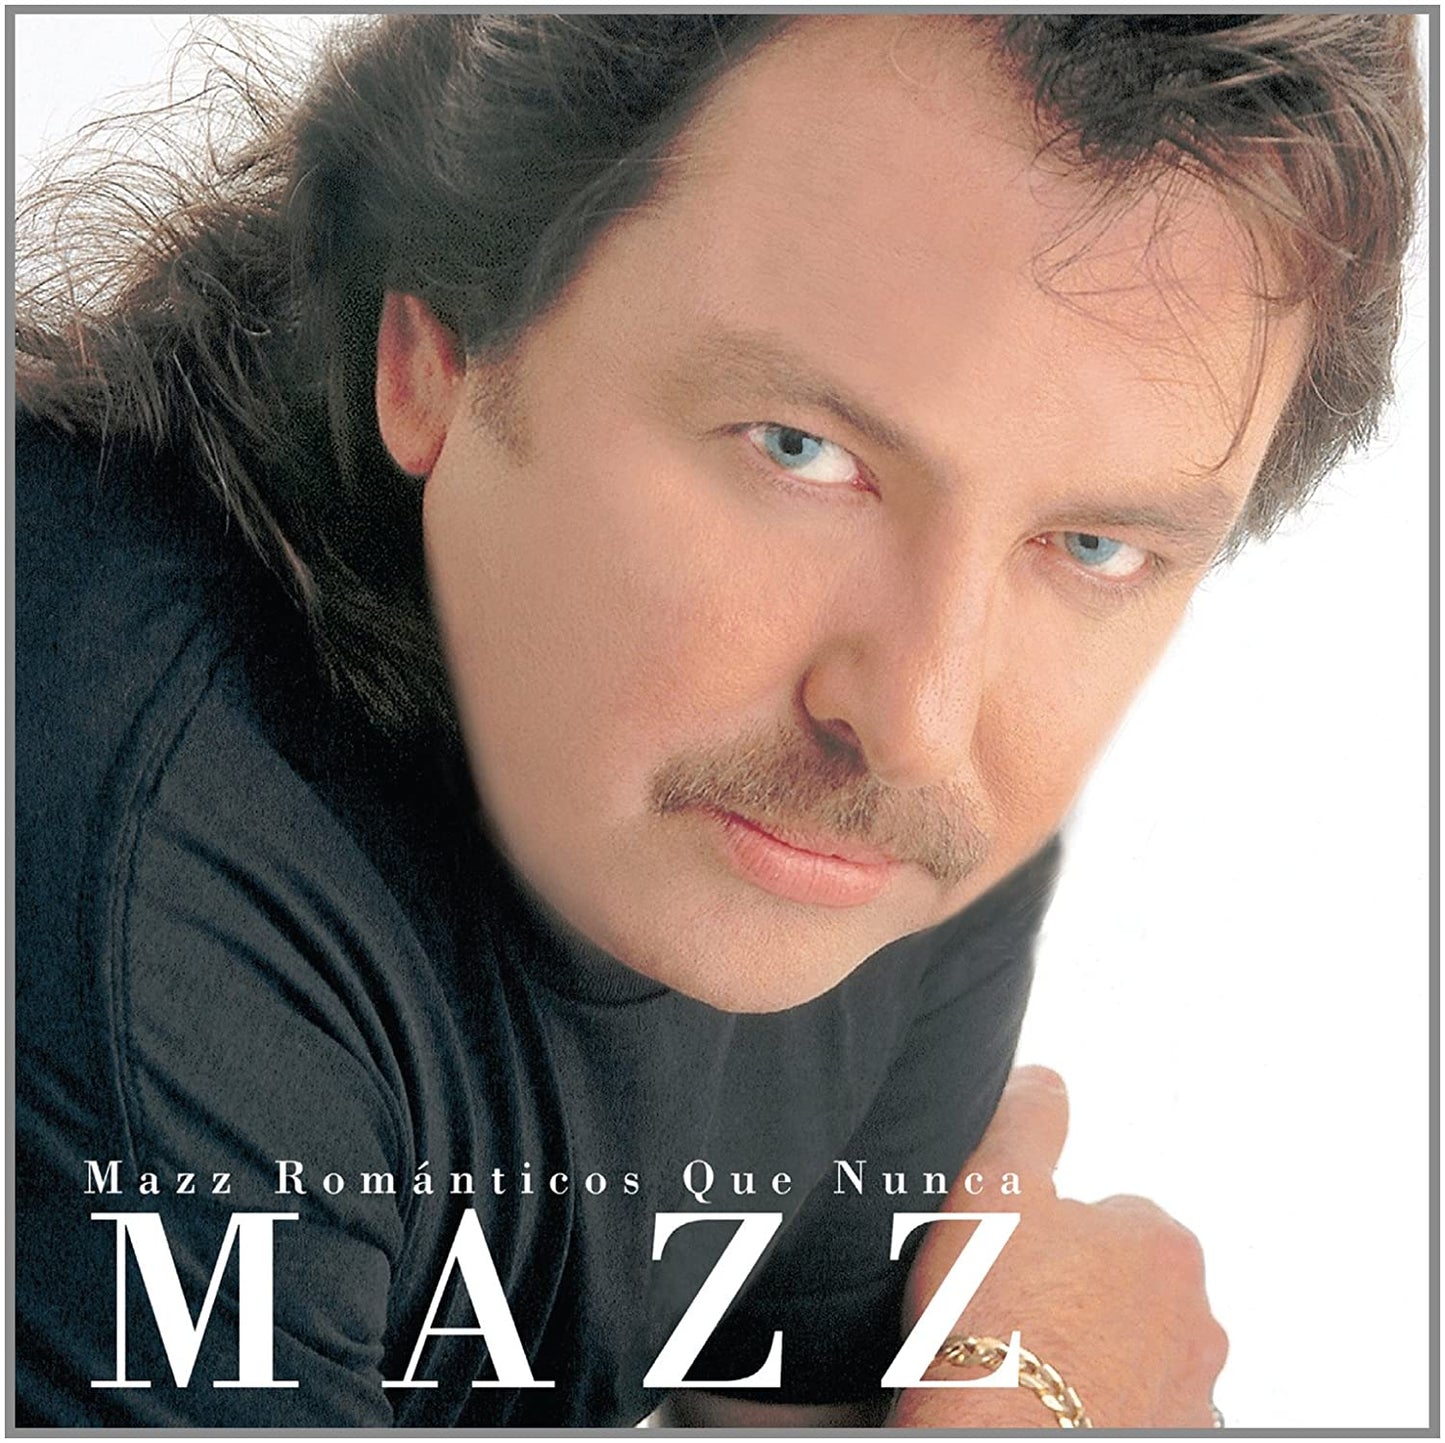 Mazz - Mazz Romanticos Que Nunca (CD)